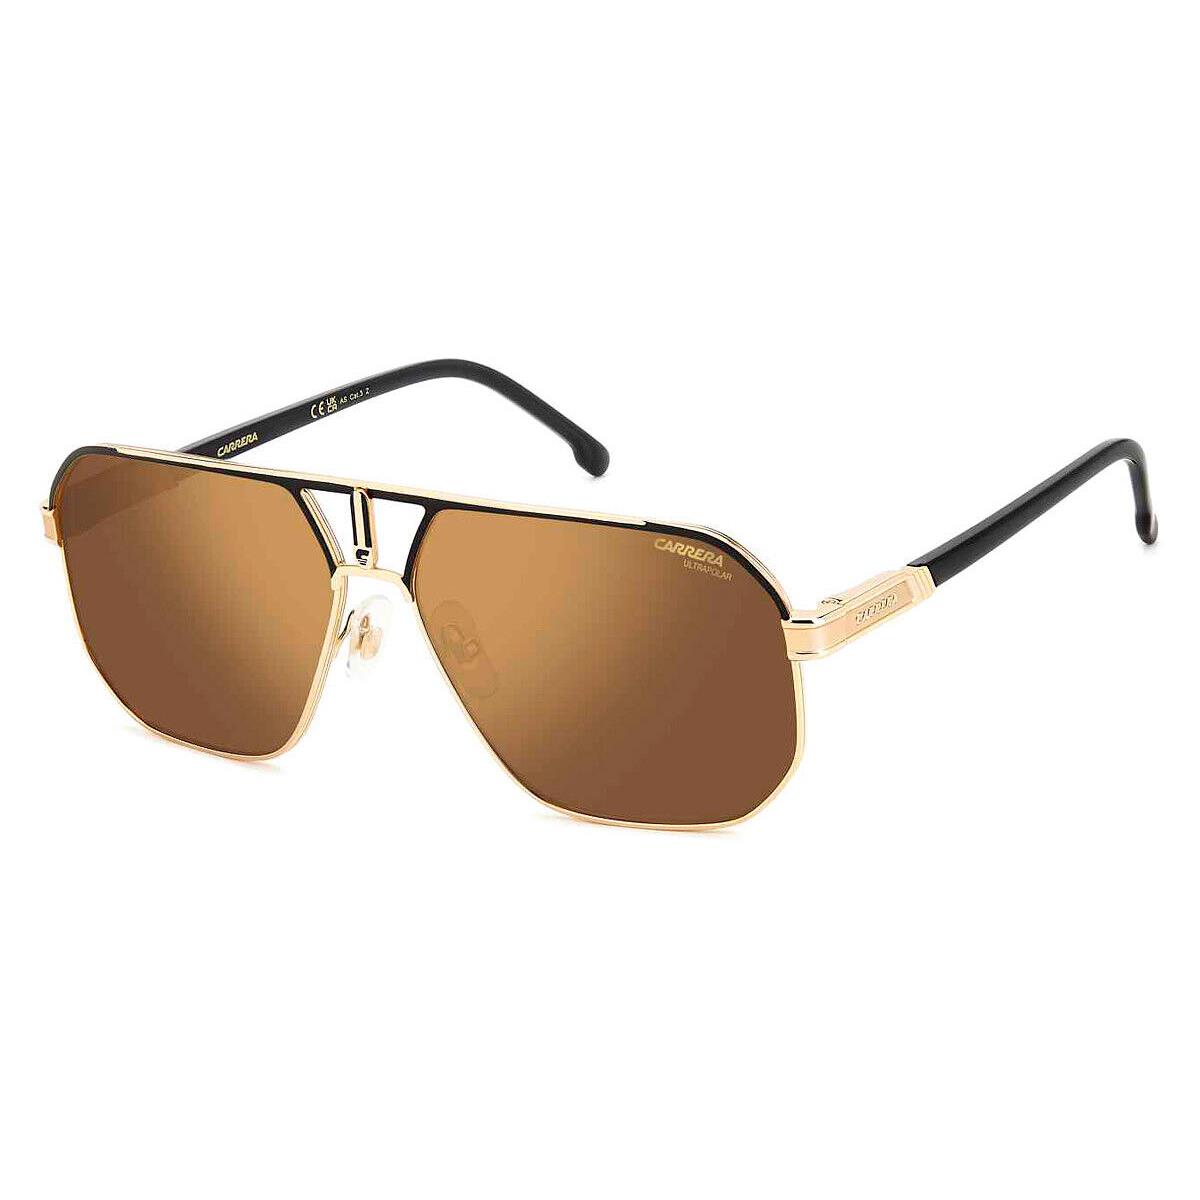 Carrera Car Sunglasses Matte Black Gold / Gold HC Polarized AR